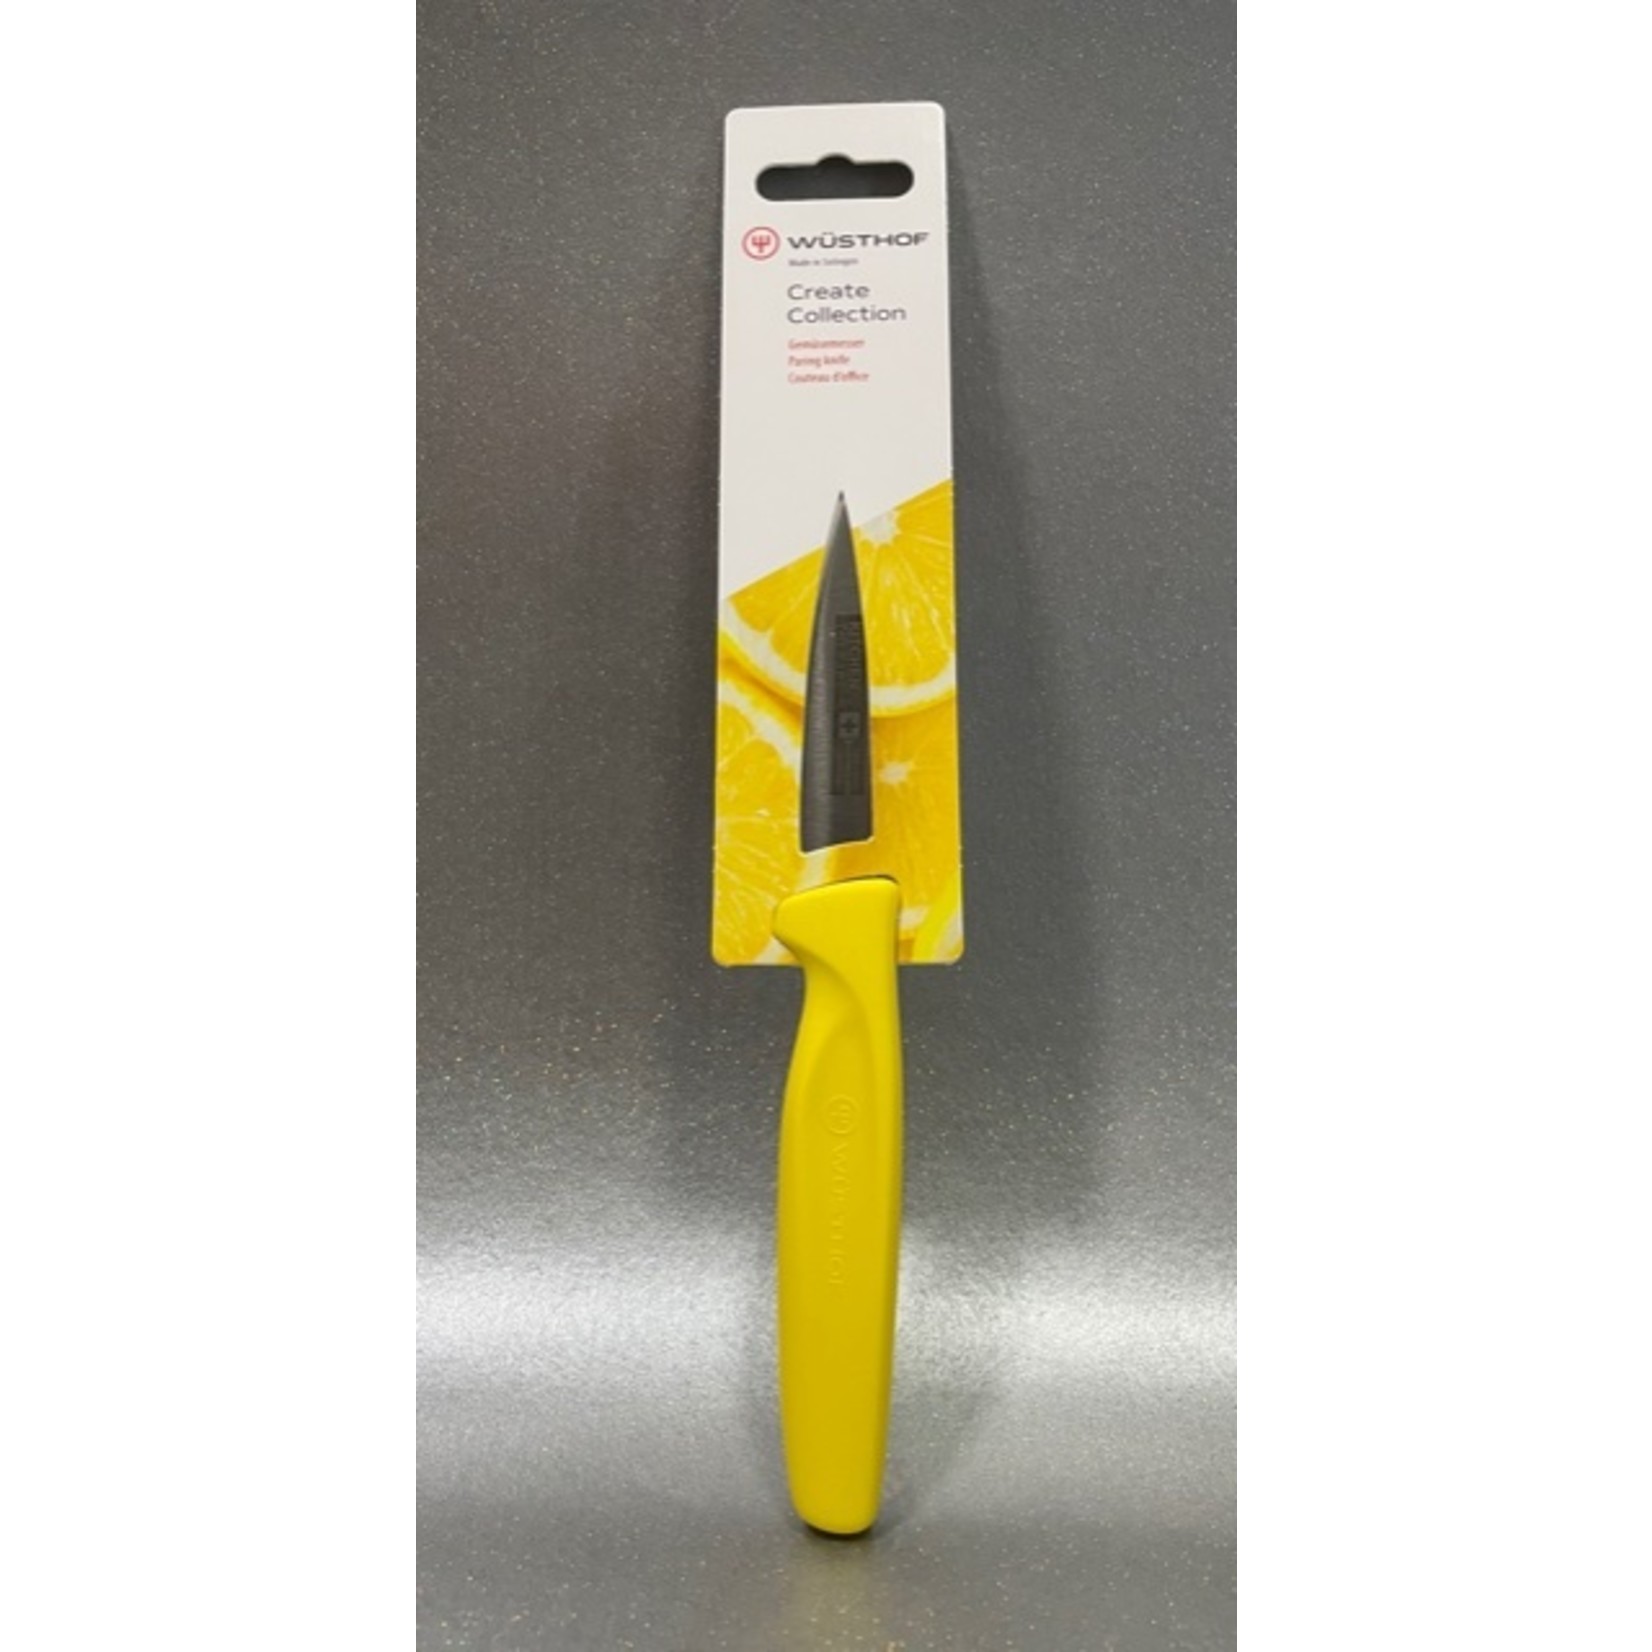 WUSTHOF WUSTHOF Kitchen Therapy Paring Knife 3" - Yellow REG 12.99